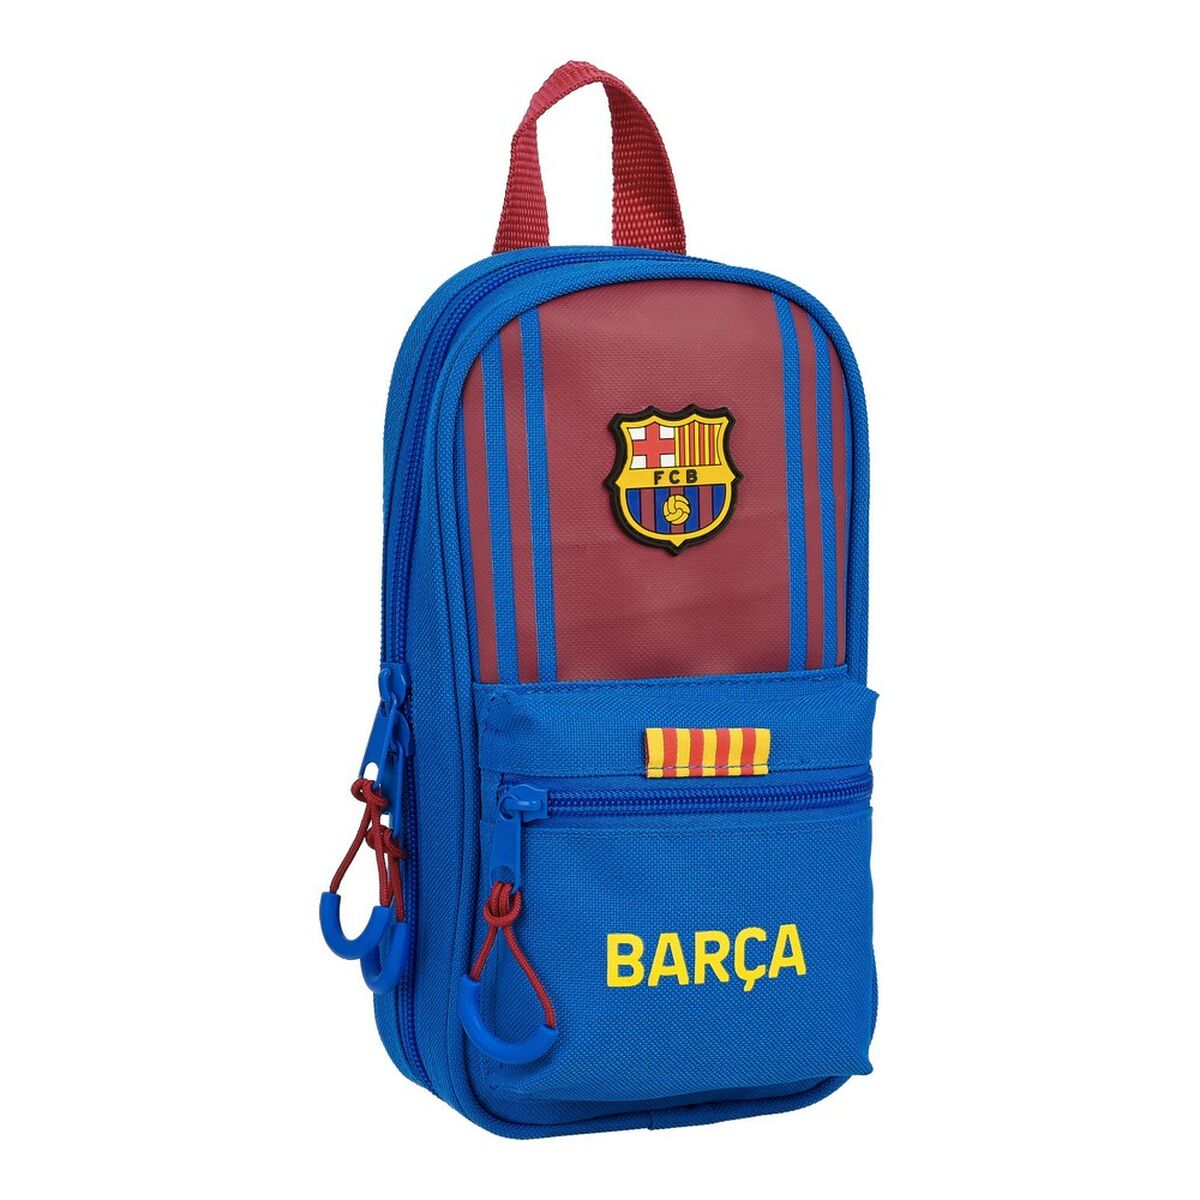 Backpack Pencil Case F.C. Barcelona Maroon Navy Blue